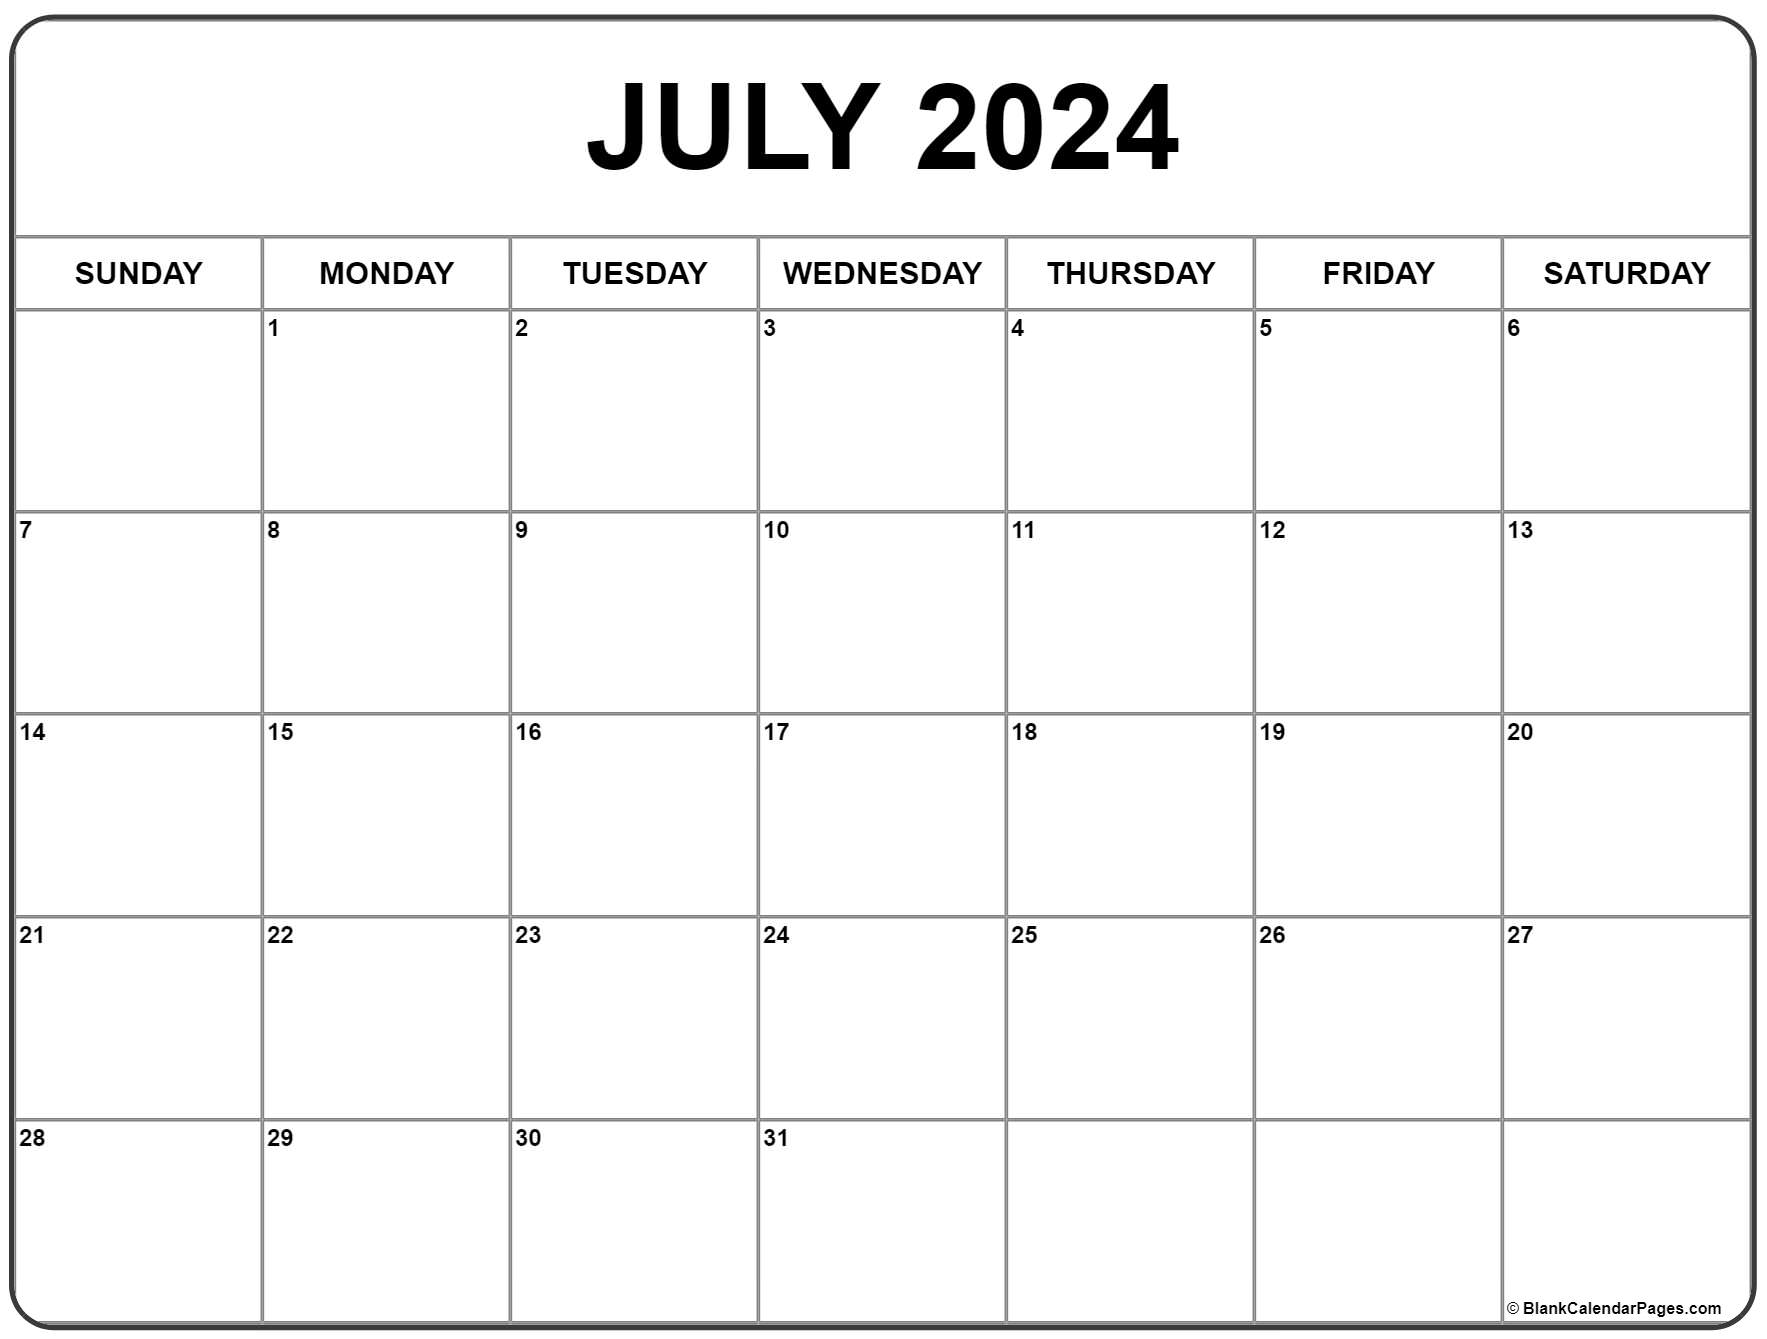 June And July 2022 Calendar Printable July 2022 Calendar | Free Printable Calendar Templates